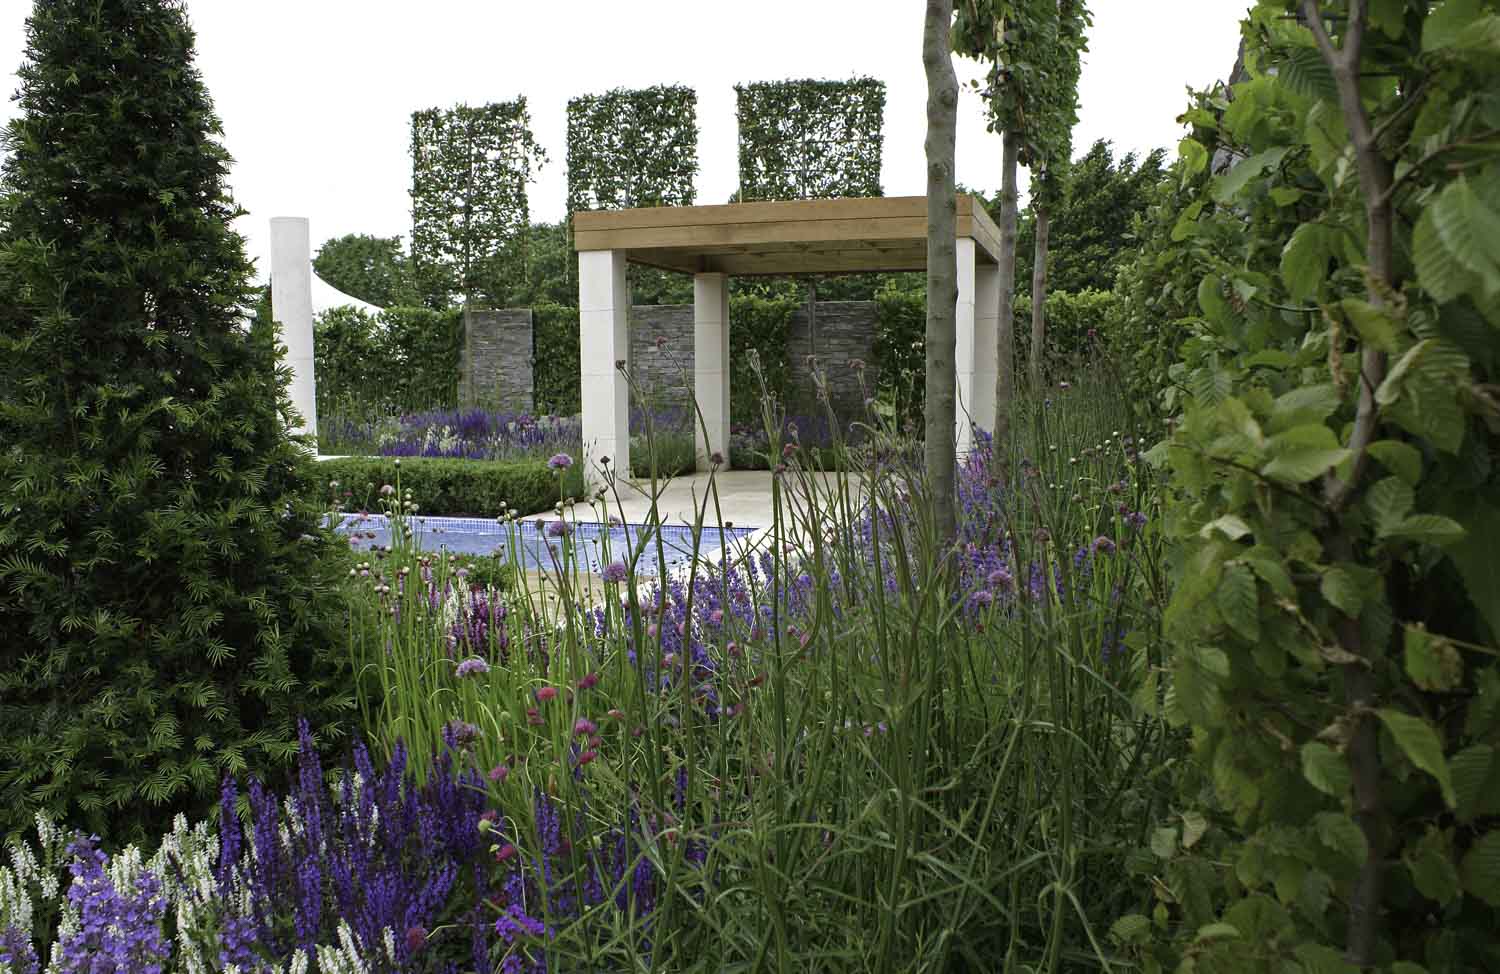 ©Jack Dunckley Landscape Design Garden Design RHS Hampton Court Palace Flower Show 2012 The Italian Job-5.jpg